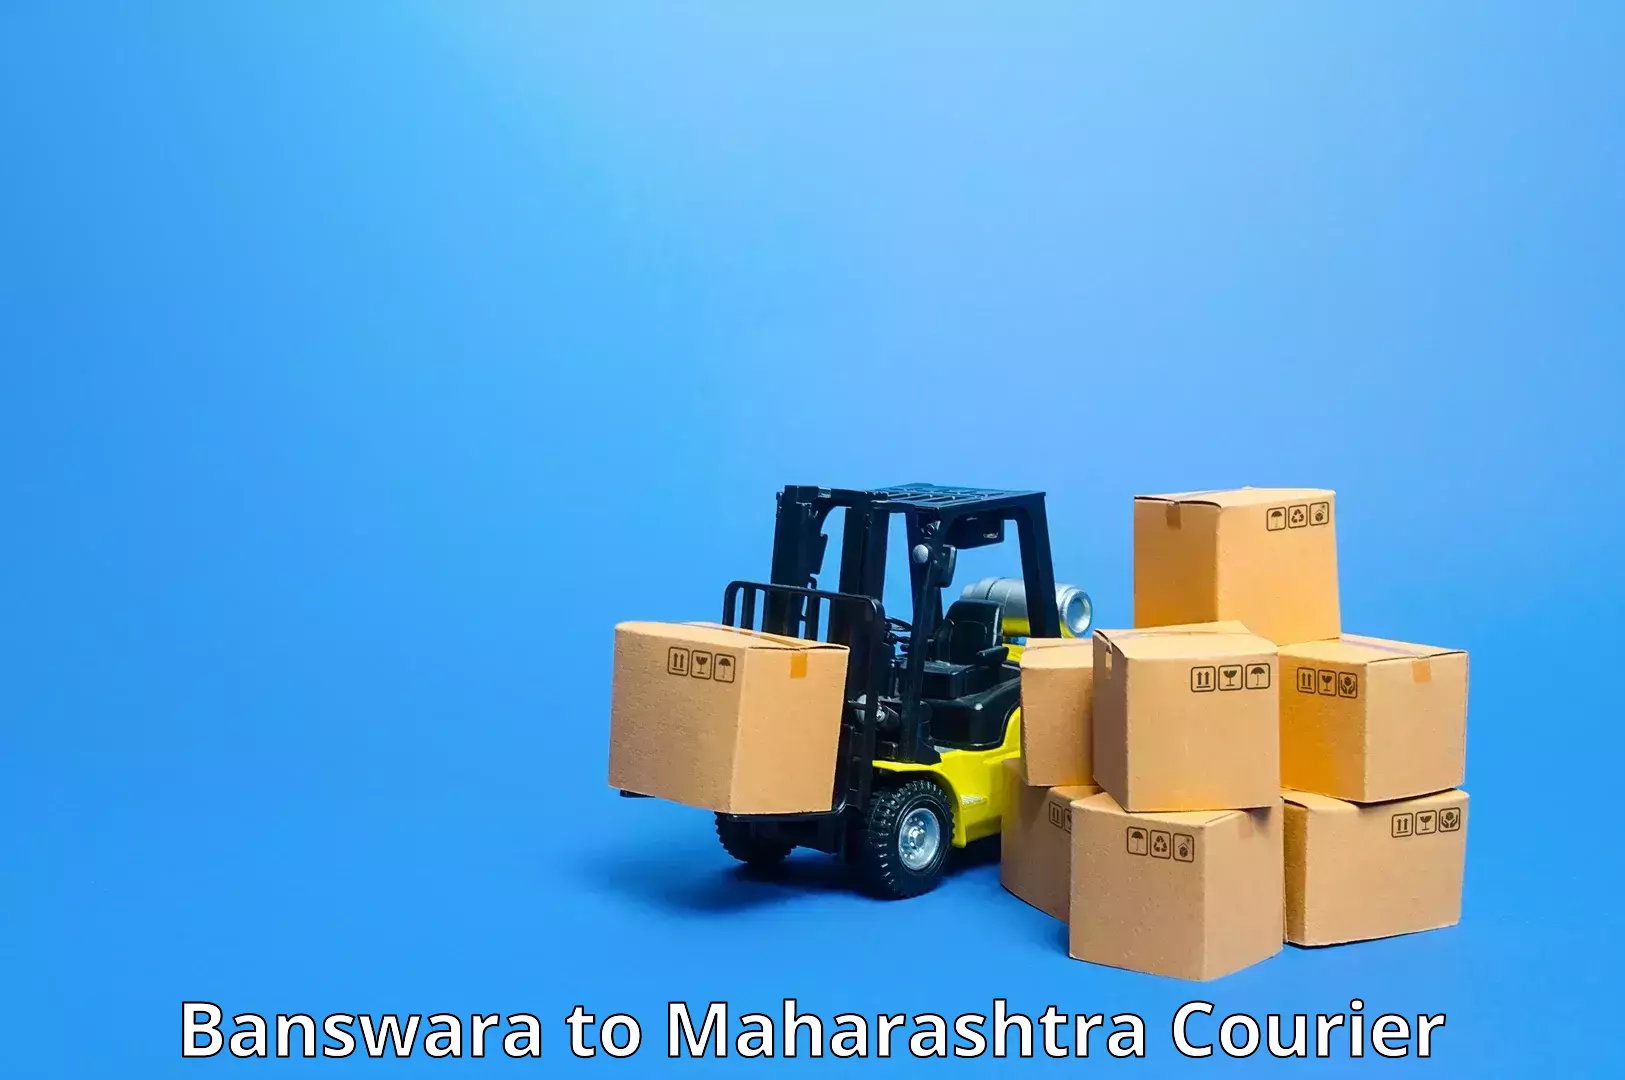 Courier service comparison Banswara to Mahur